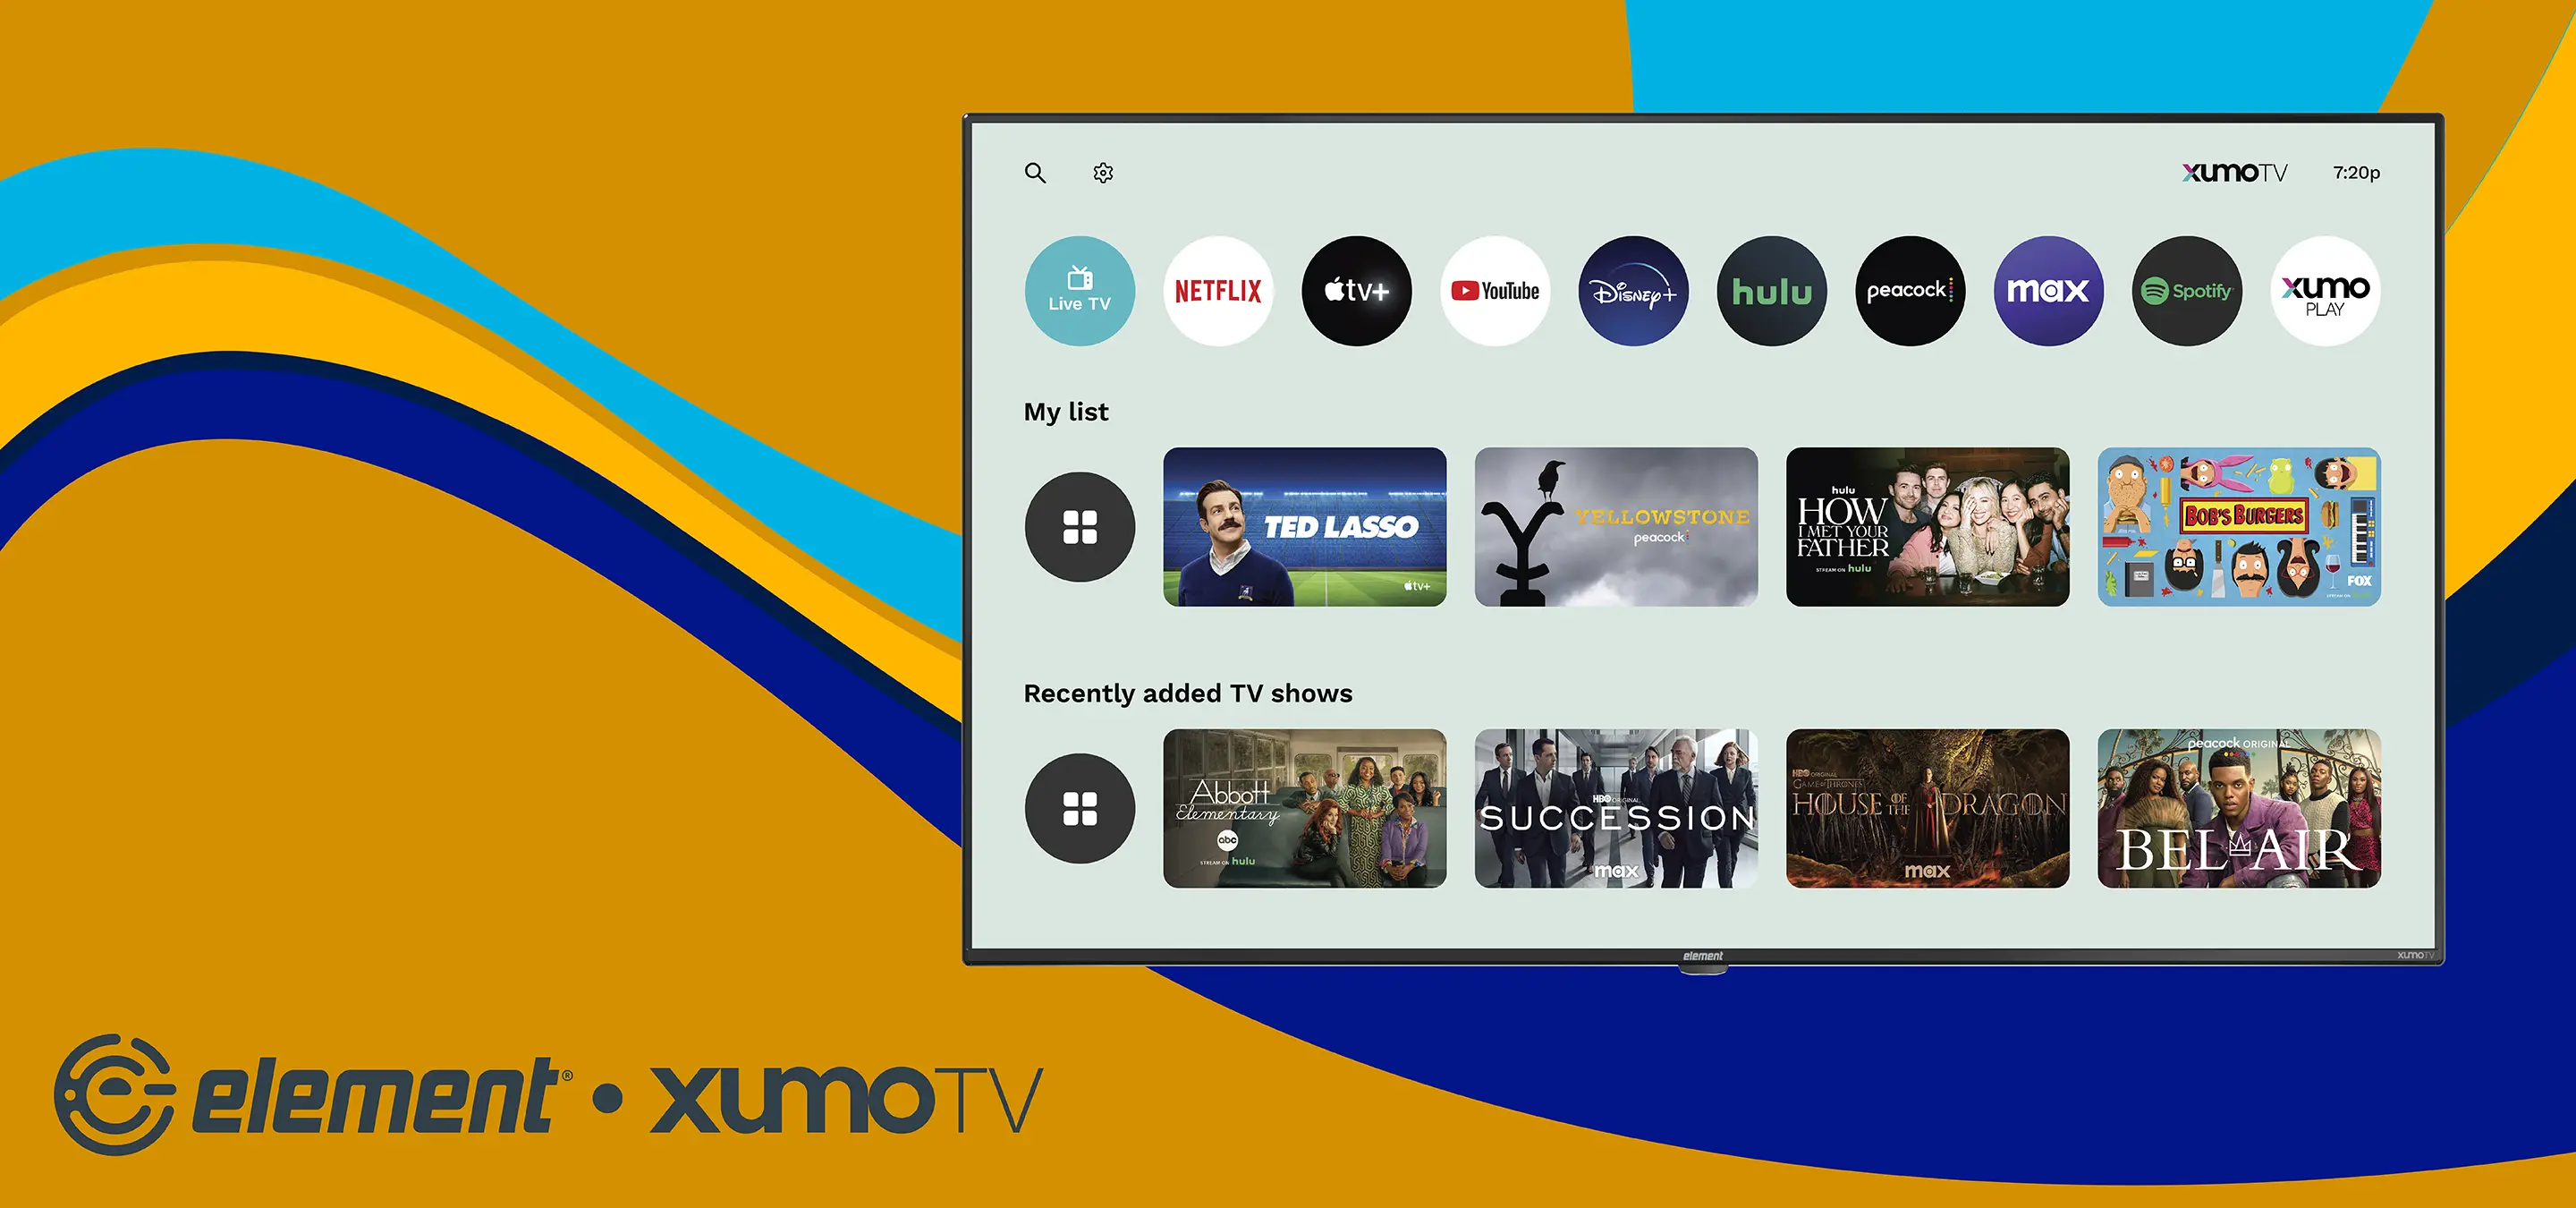 Xumo smart platform